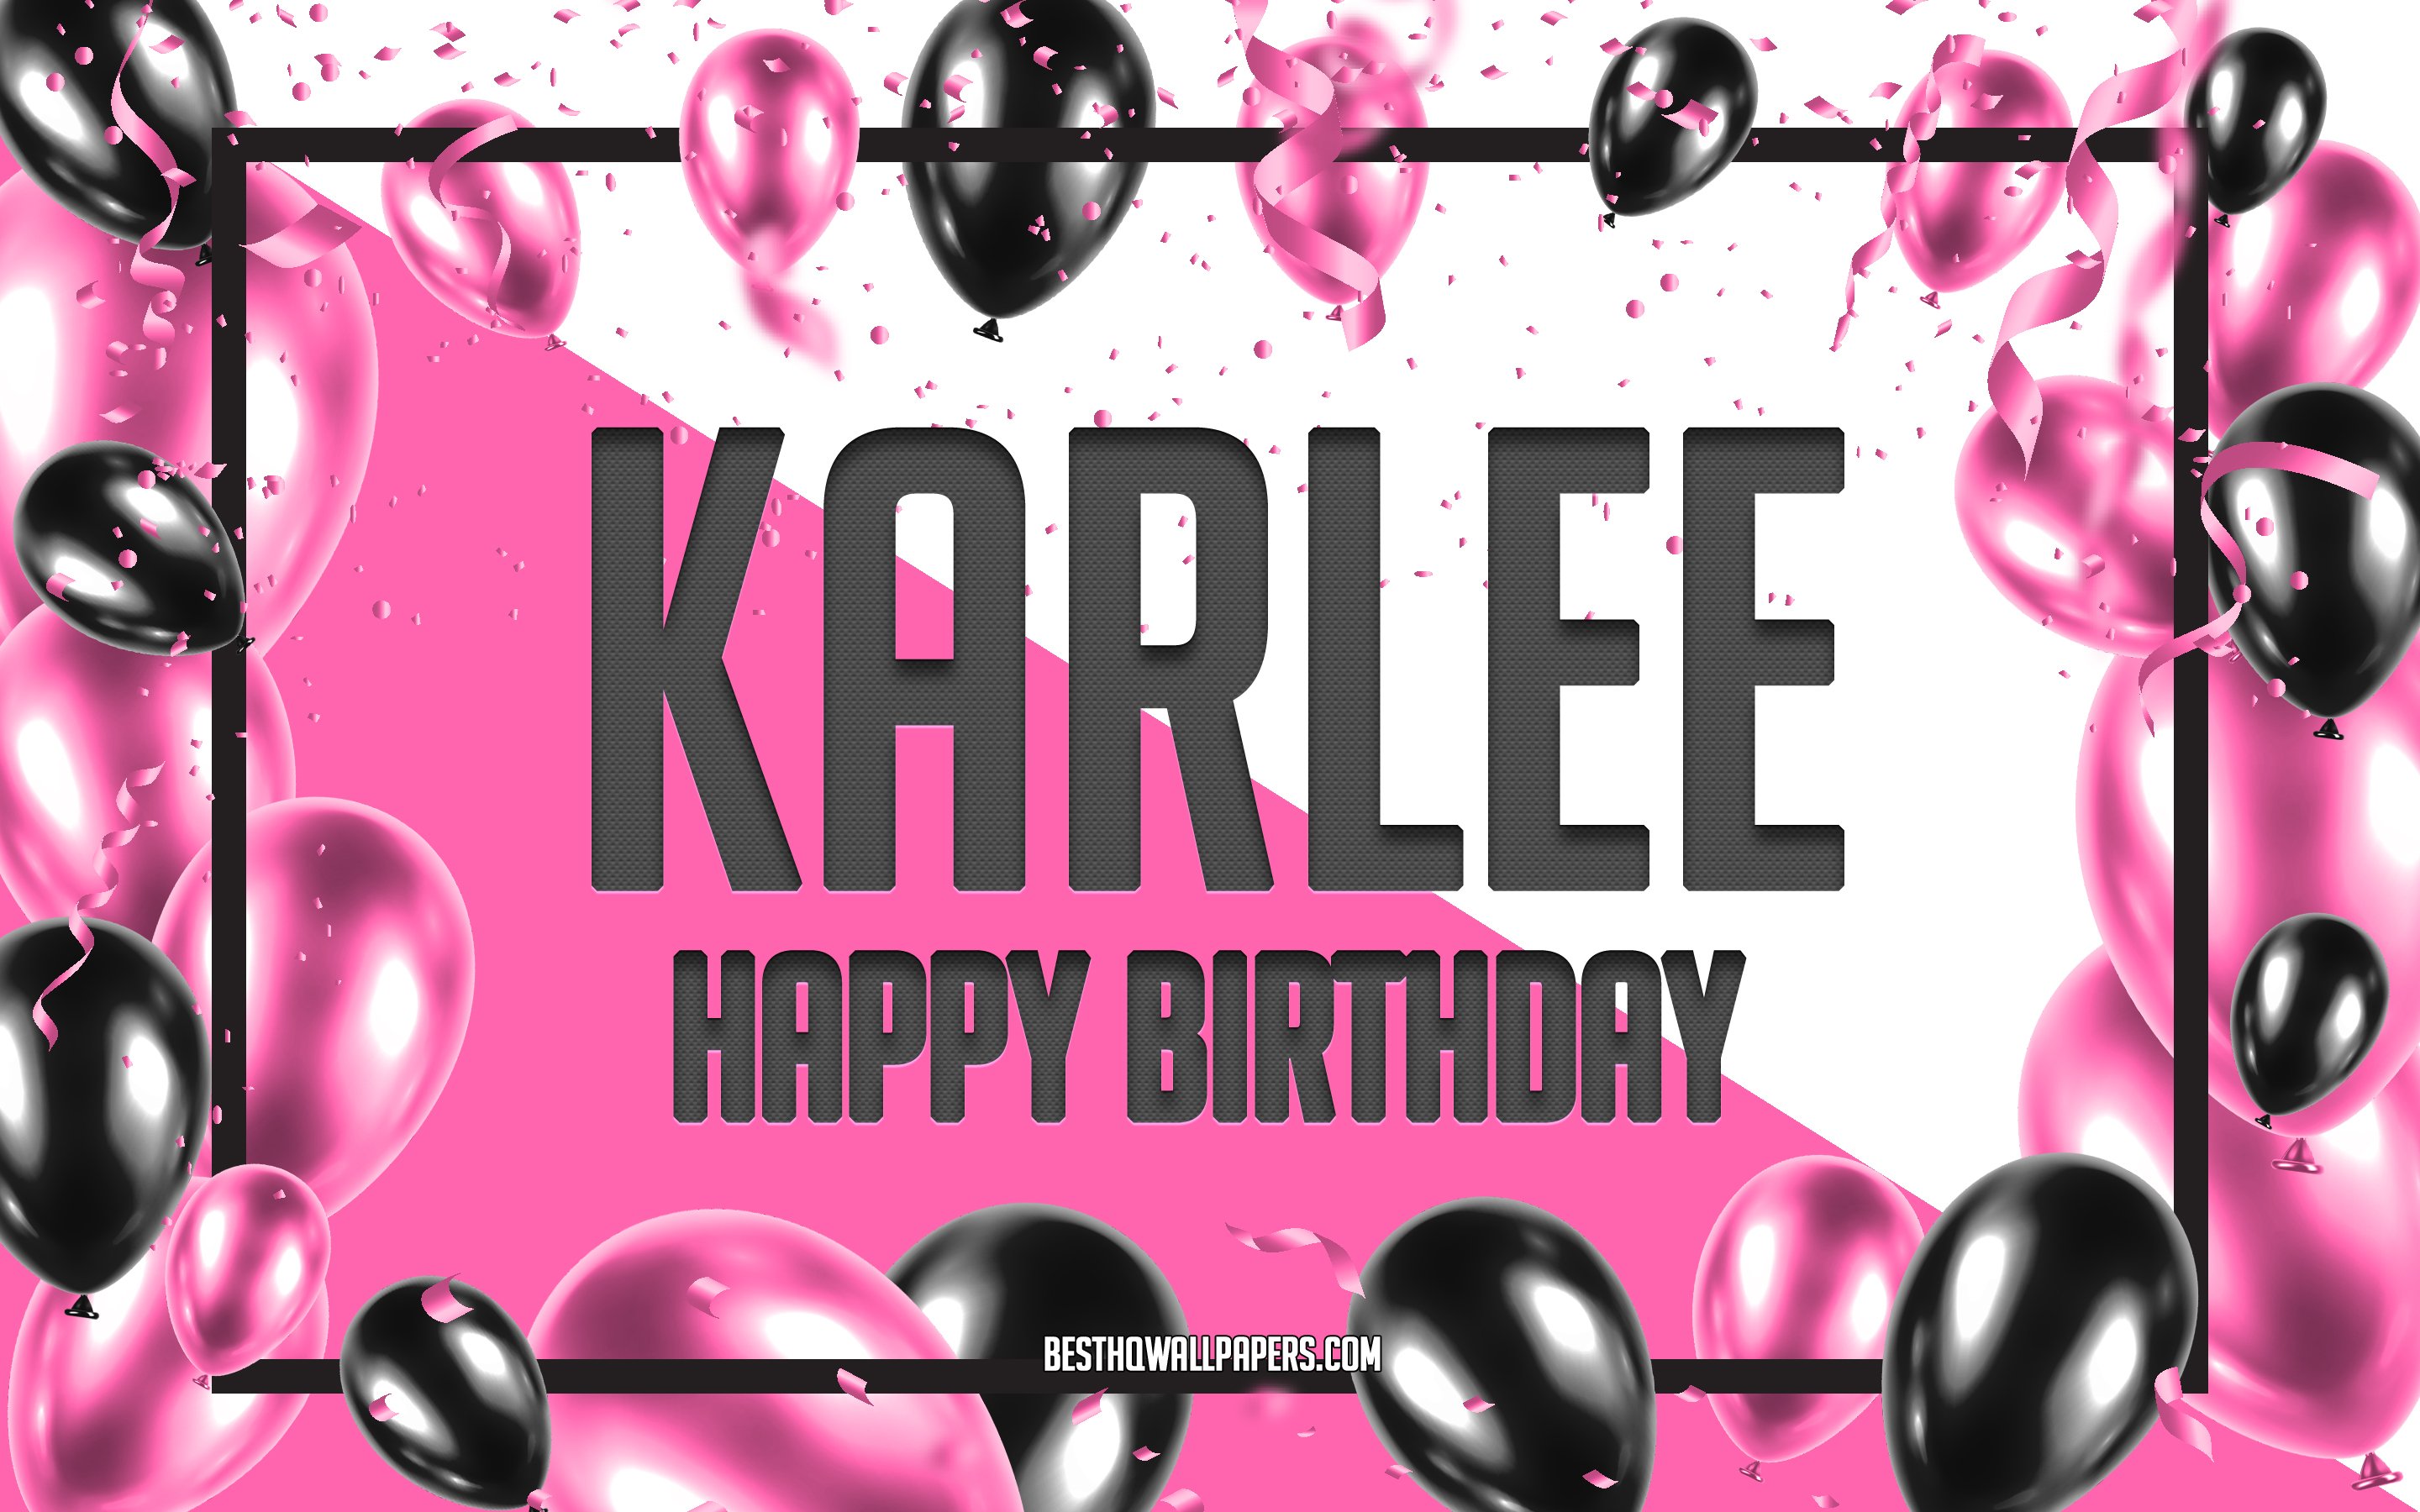 Happy birthday karlee